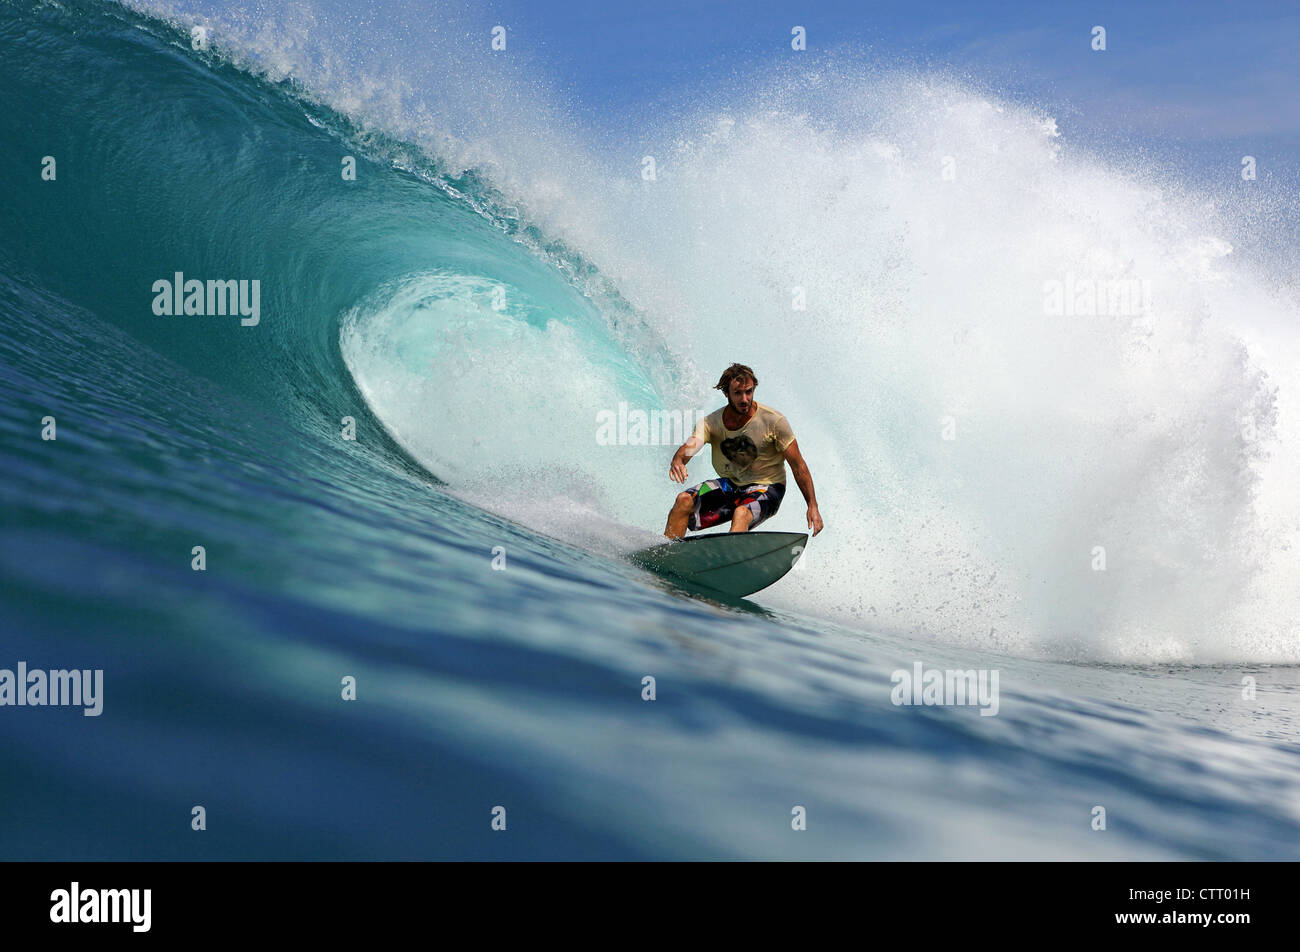 Australian surfer riding a large hollow wave on a remote reef break on Nias Island, Sumatra. Stock Photo